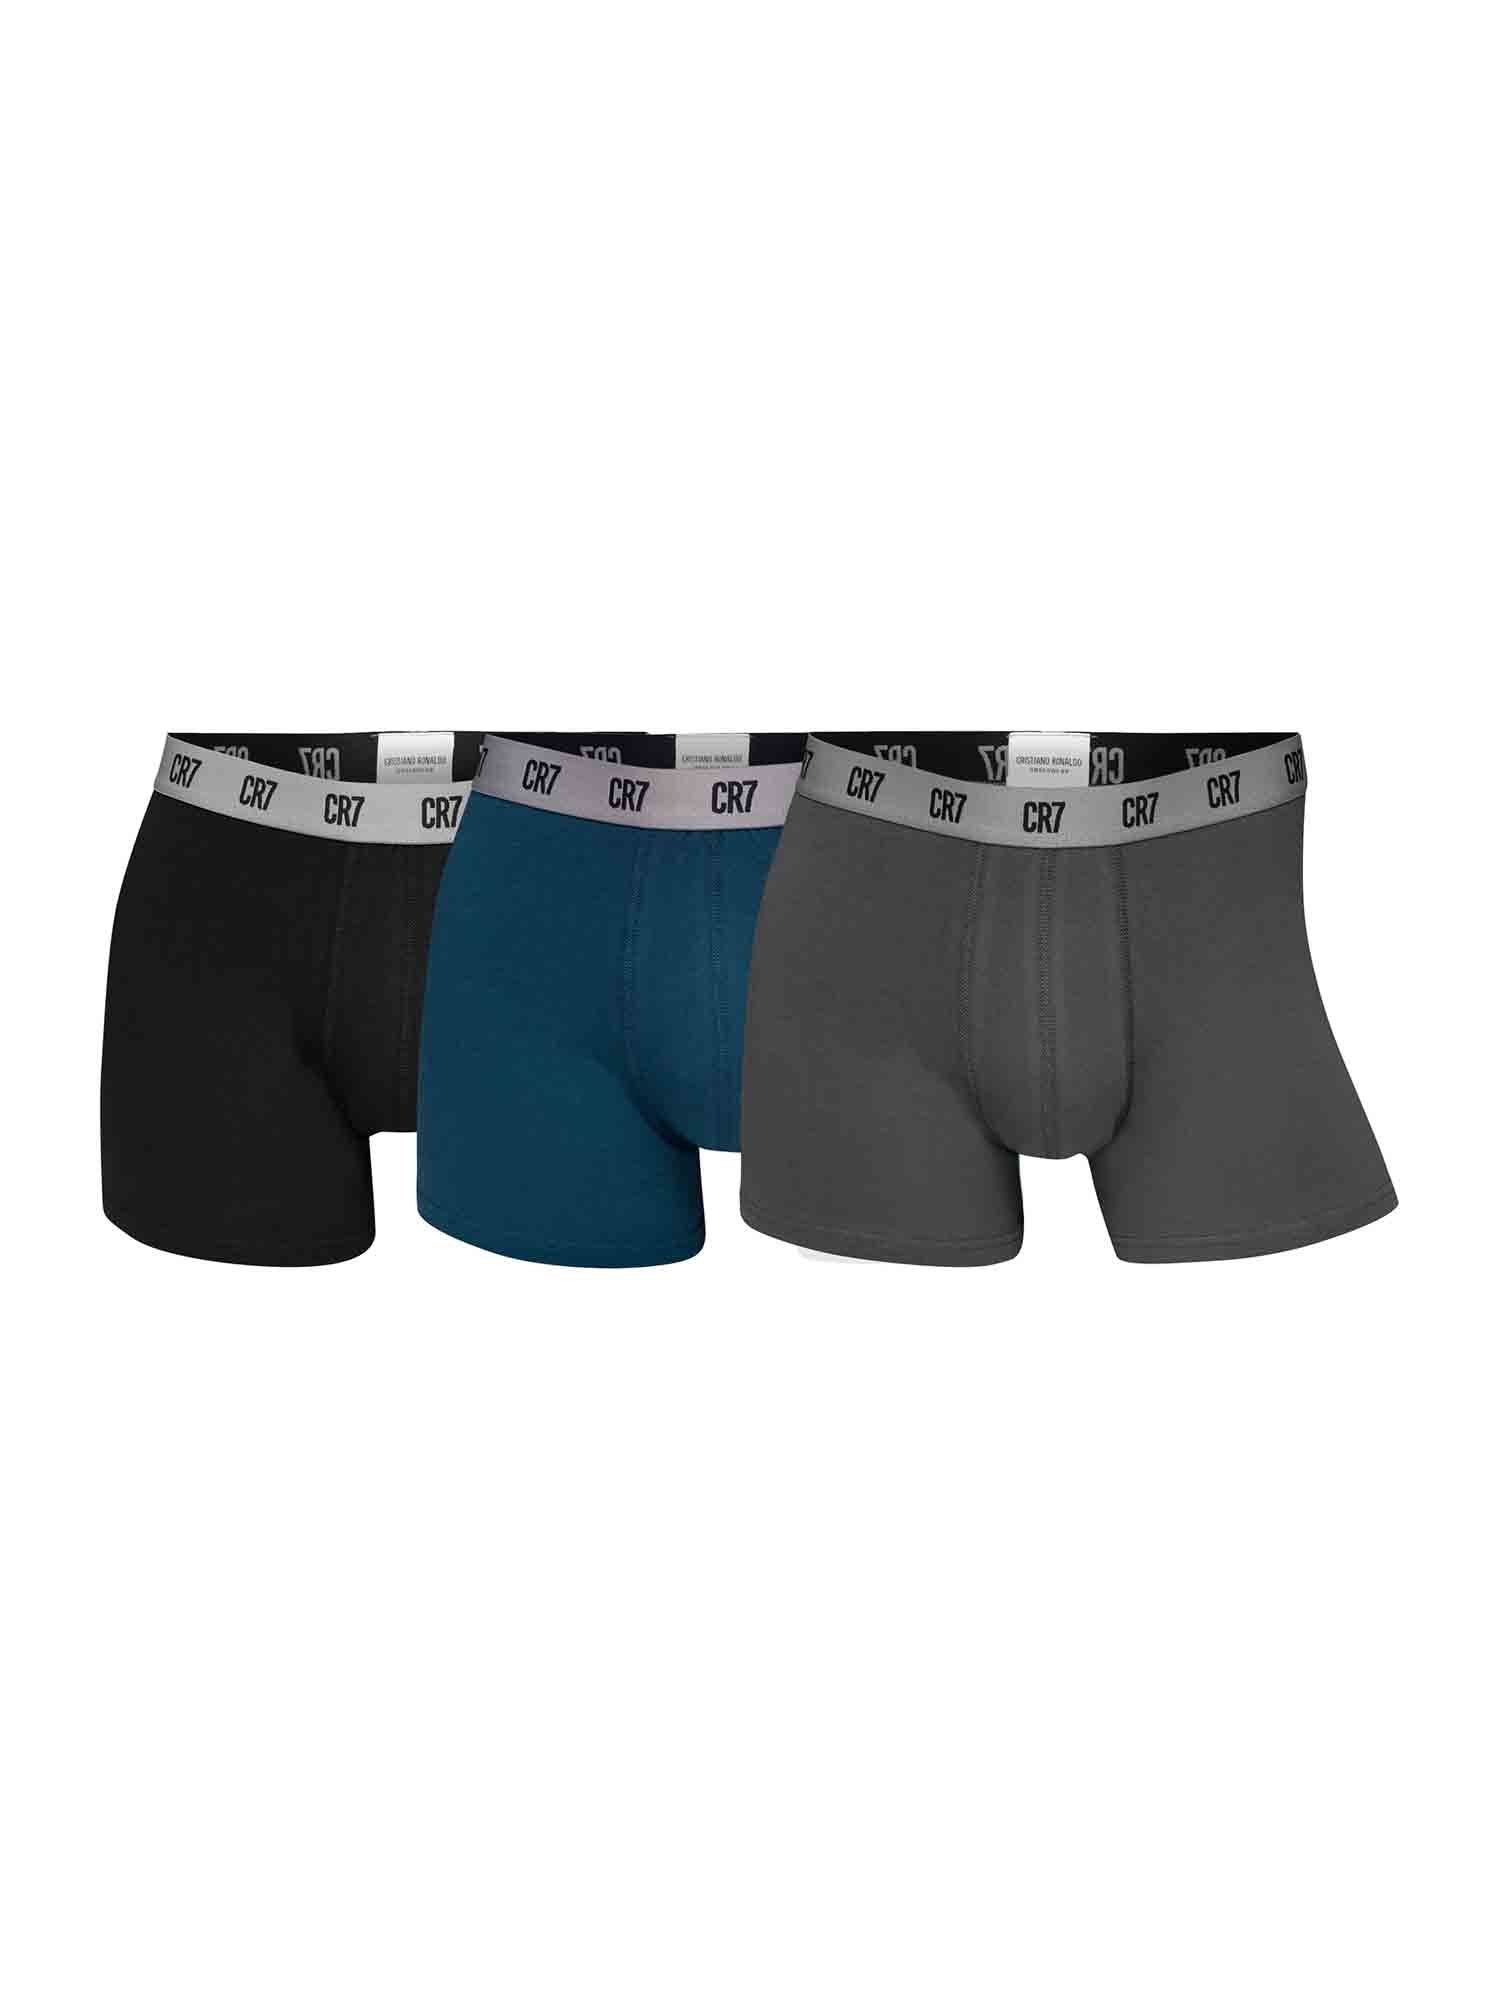 Trunks 21 Retro Pants Männer (3-St) Herren Multipack CR7 Boxershorts Multi Pants Retro